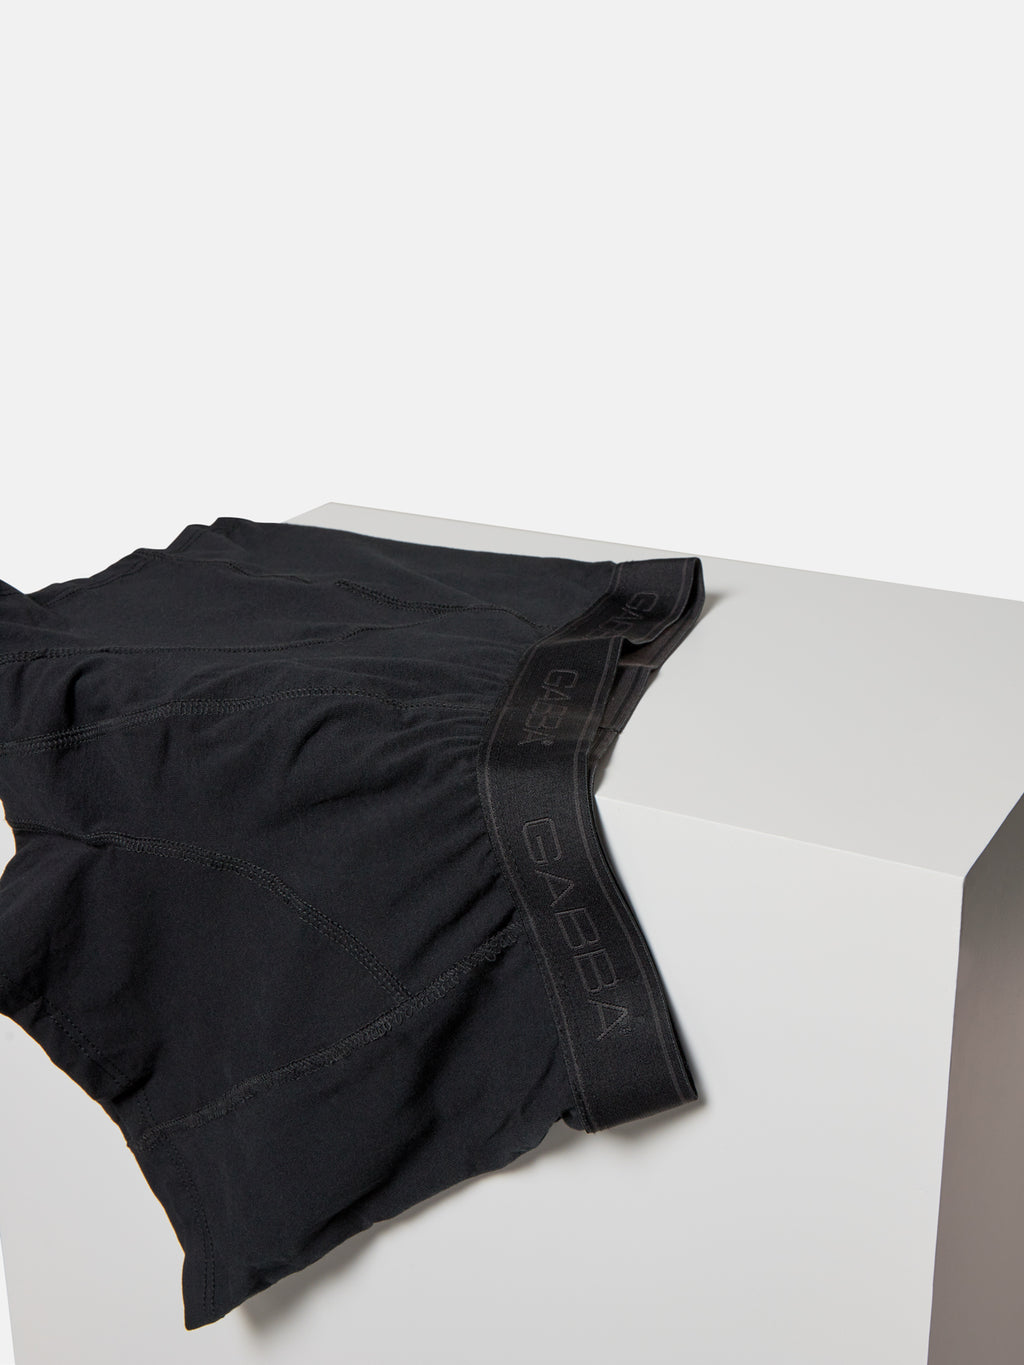 Gabba Underwear - Single Pack - Black